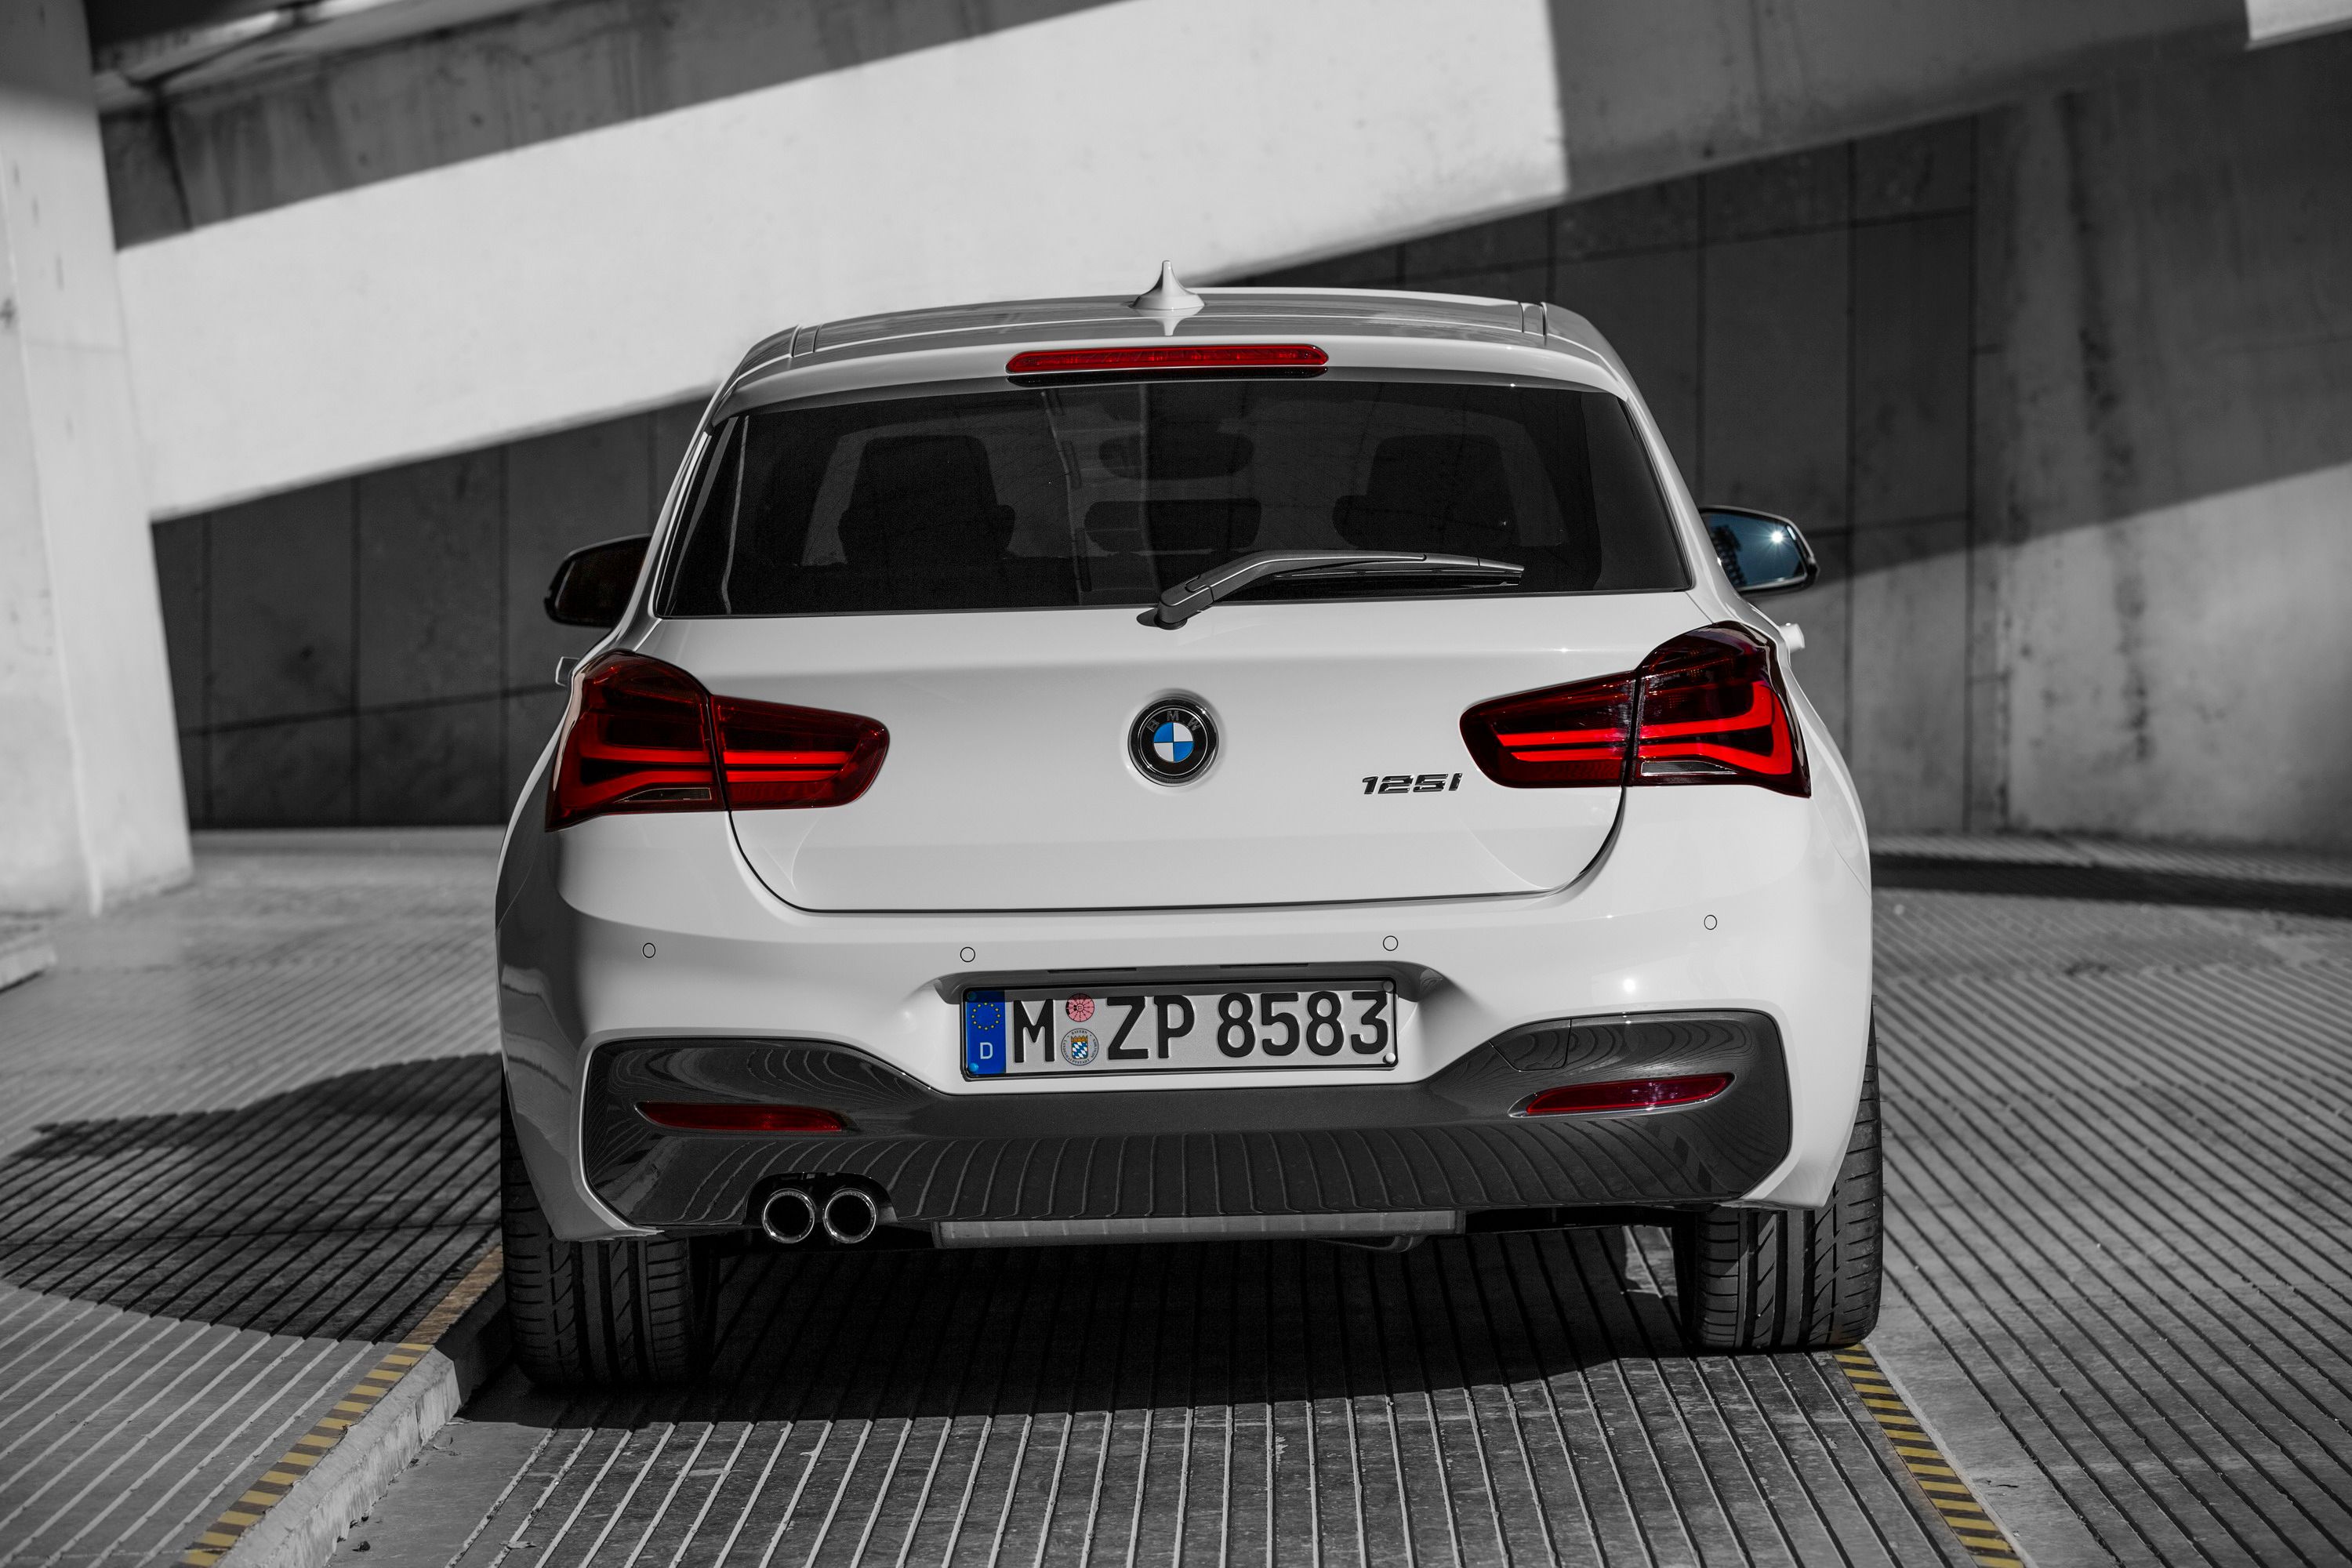 2016 - 2018 BMW 1 Series